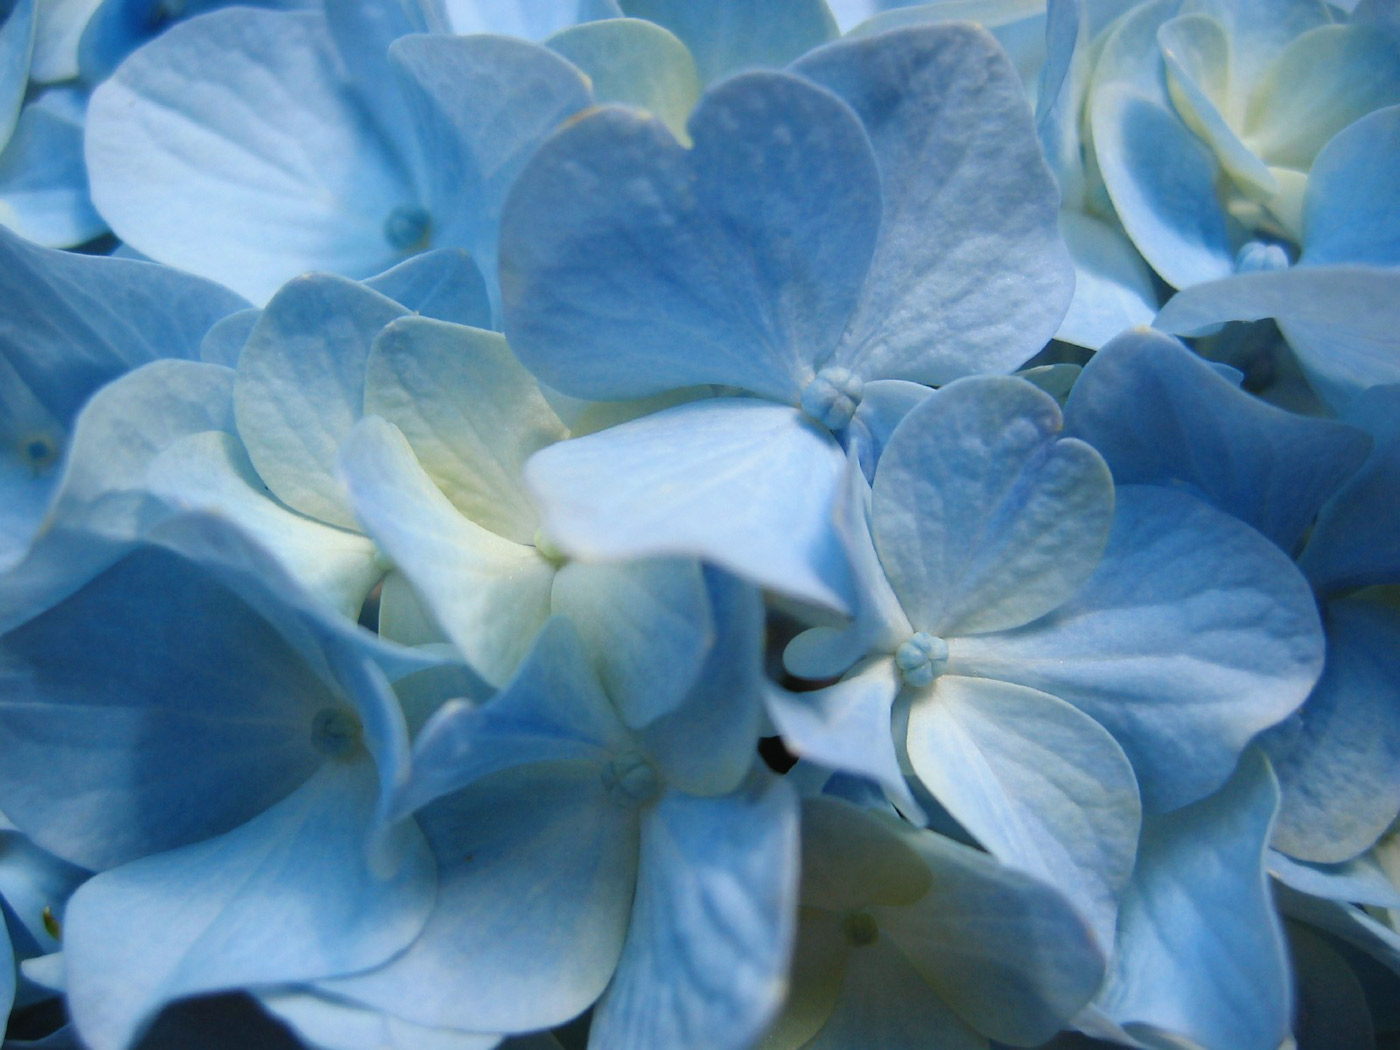 http://4.bp.blogspot.com/_Ym3du2sG3R4/S8628i5loMI/AAAAAAAACH4/Cap19Y4dhSs/s1600/Blue-Hydrangea-Flower-wallpaper-1400x1050.jpg